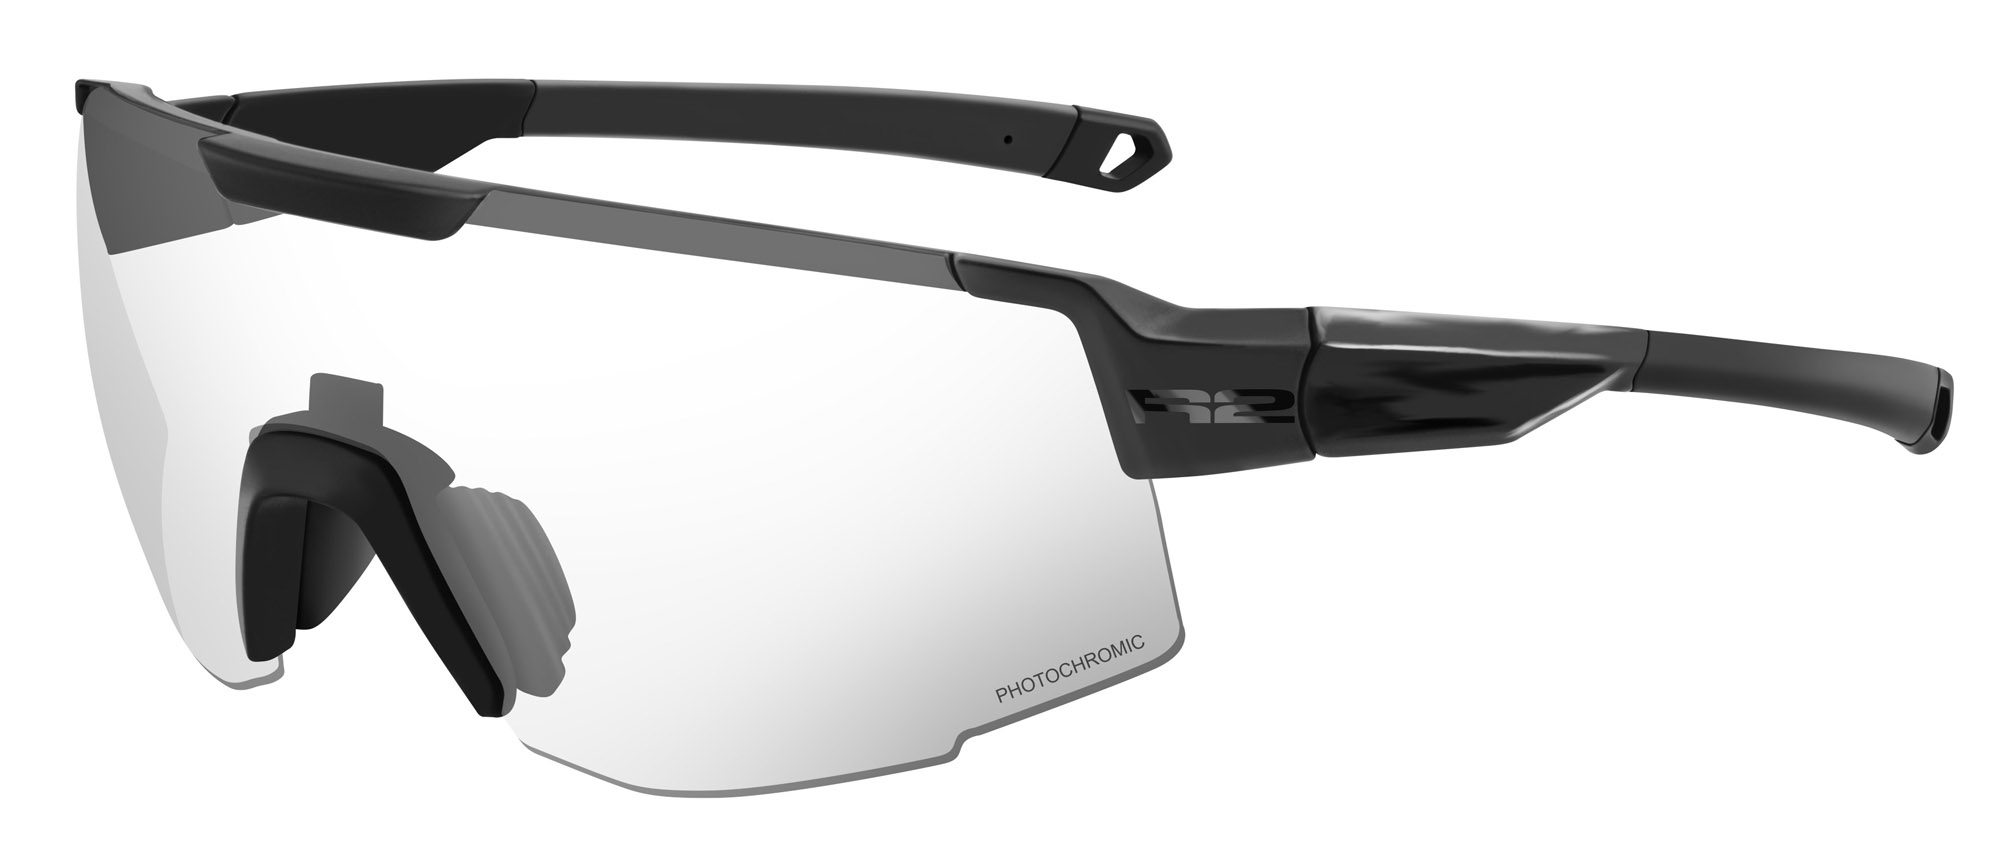 Photochromatic sunglasses  R2 EDGE AT101D standard